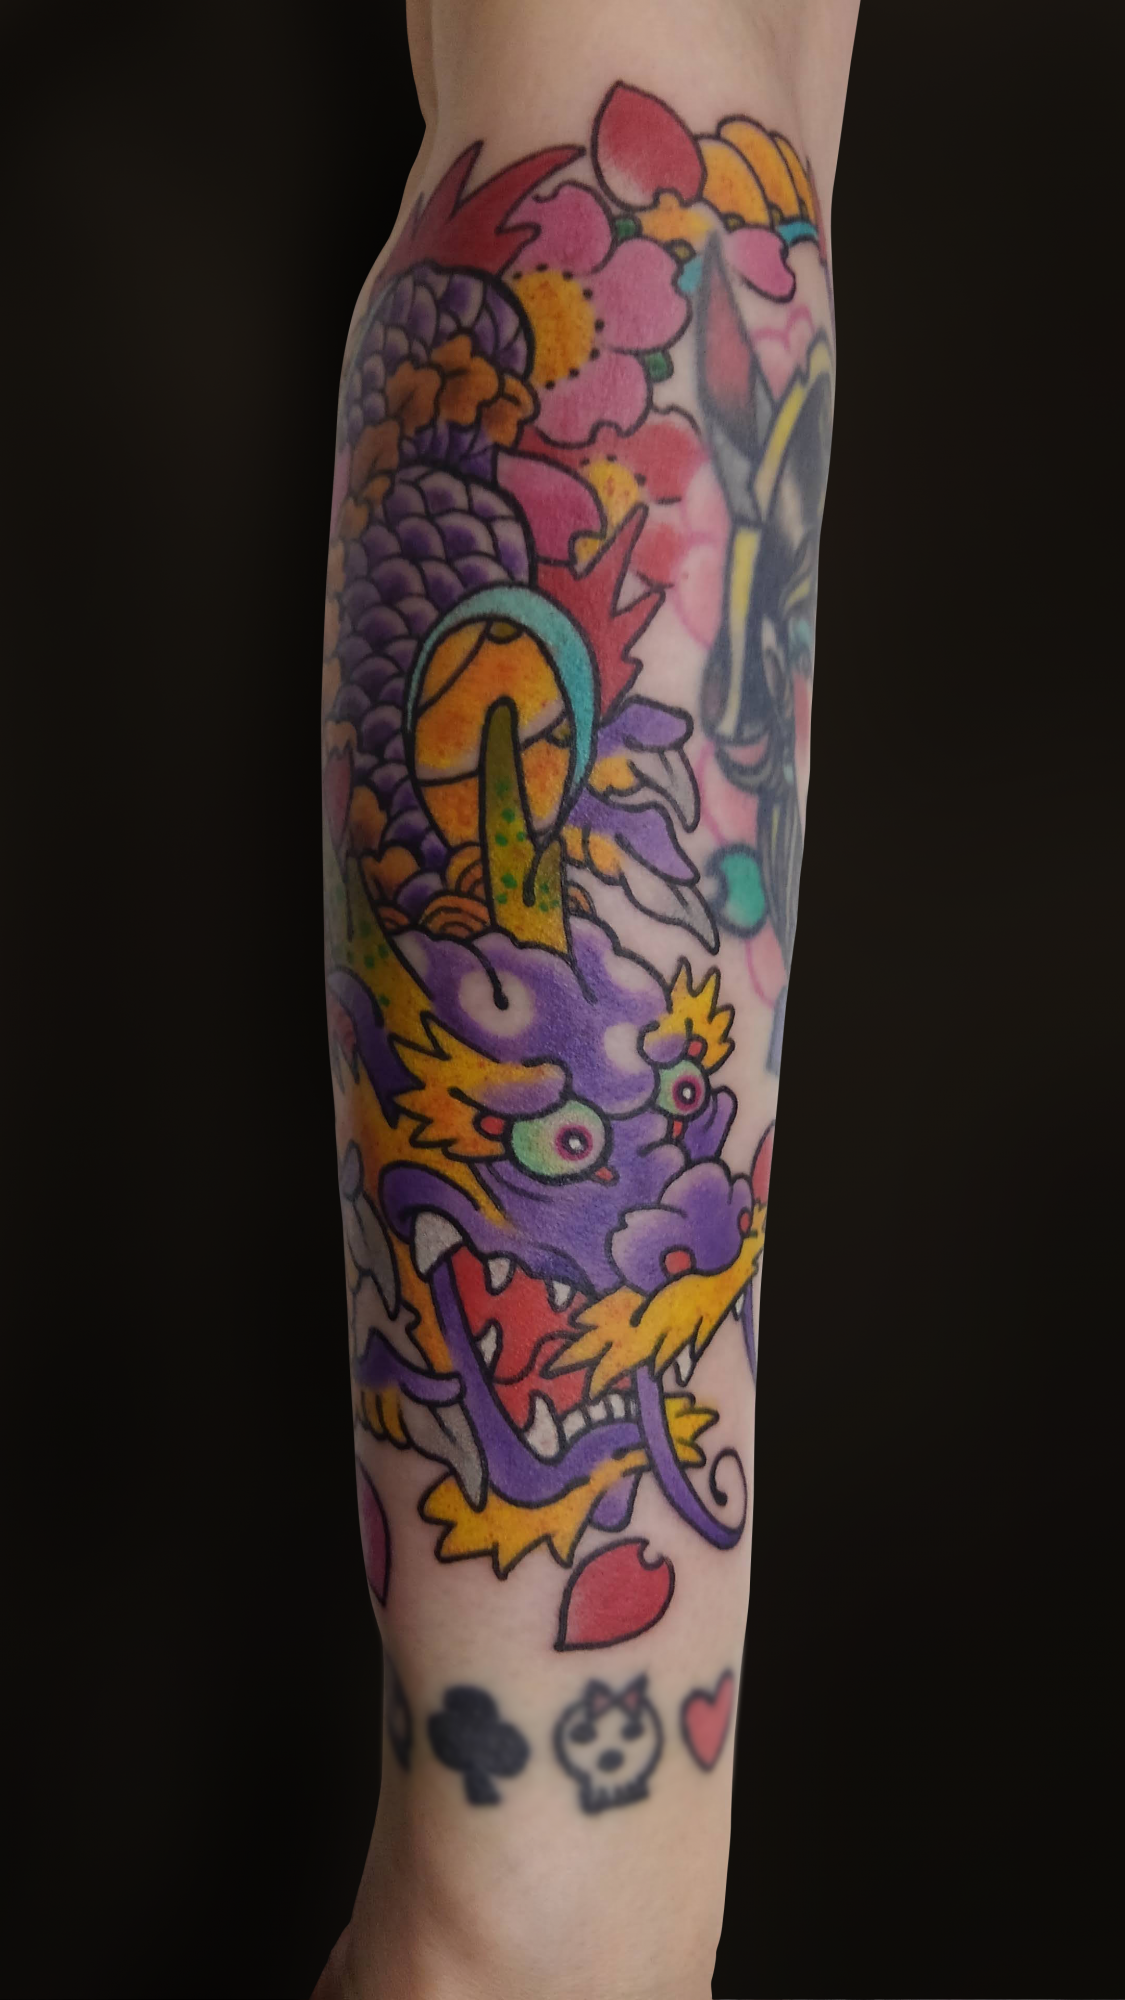 KINGRAT TATTOO 作品 | LAVA gallery | Tattoo artist: Yuji Anai | キングラット | ラバギャラリー | タトゥーアート | 福岡県北九州市 | krt_color_163